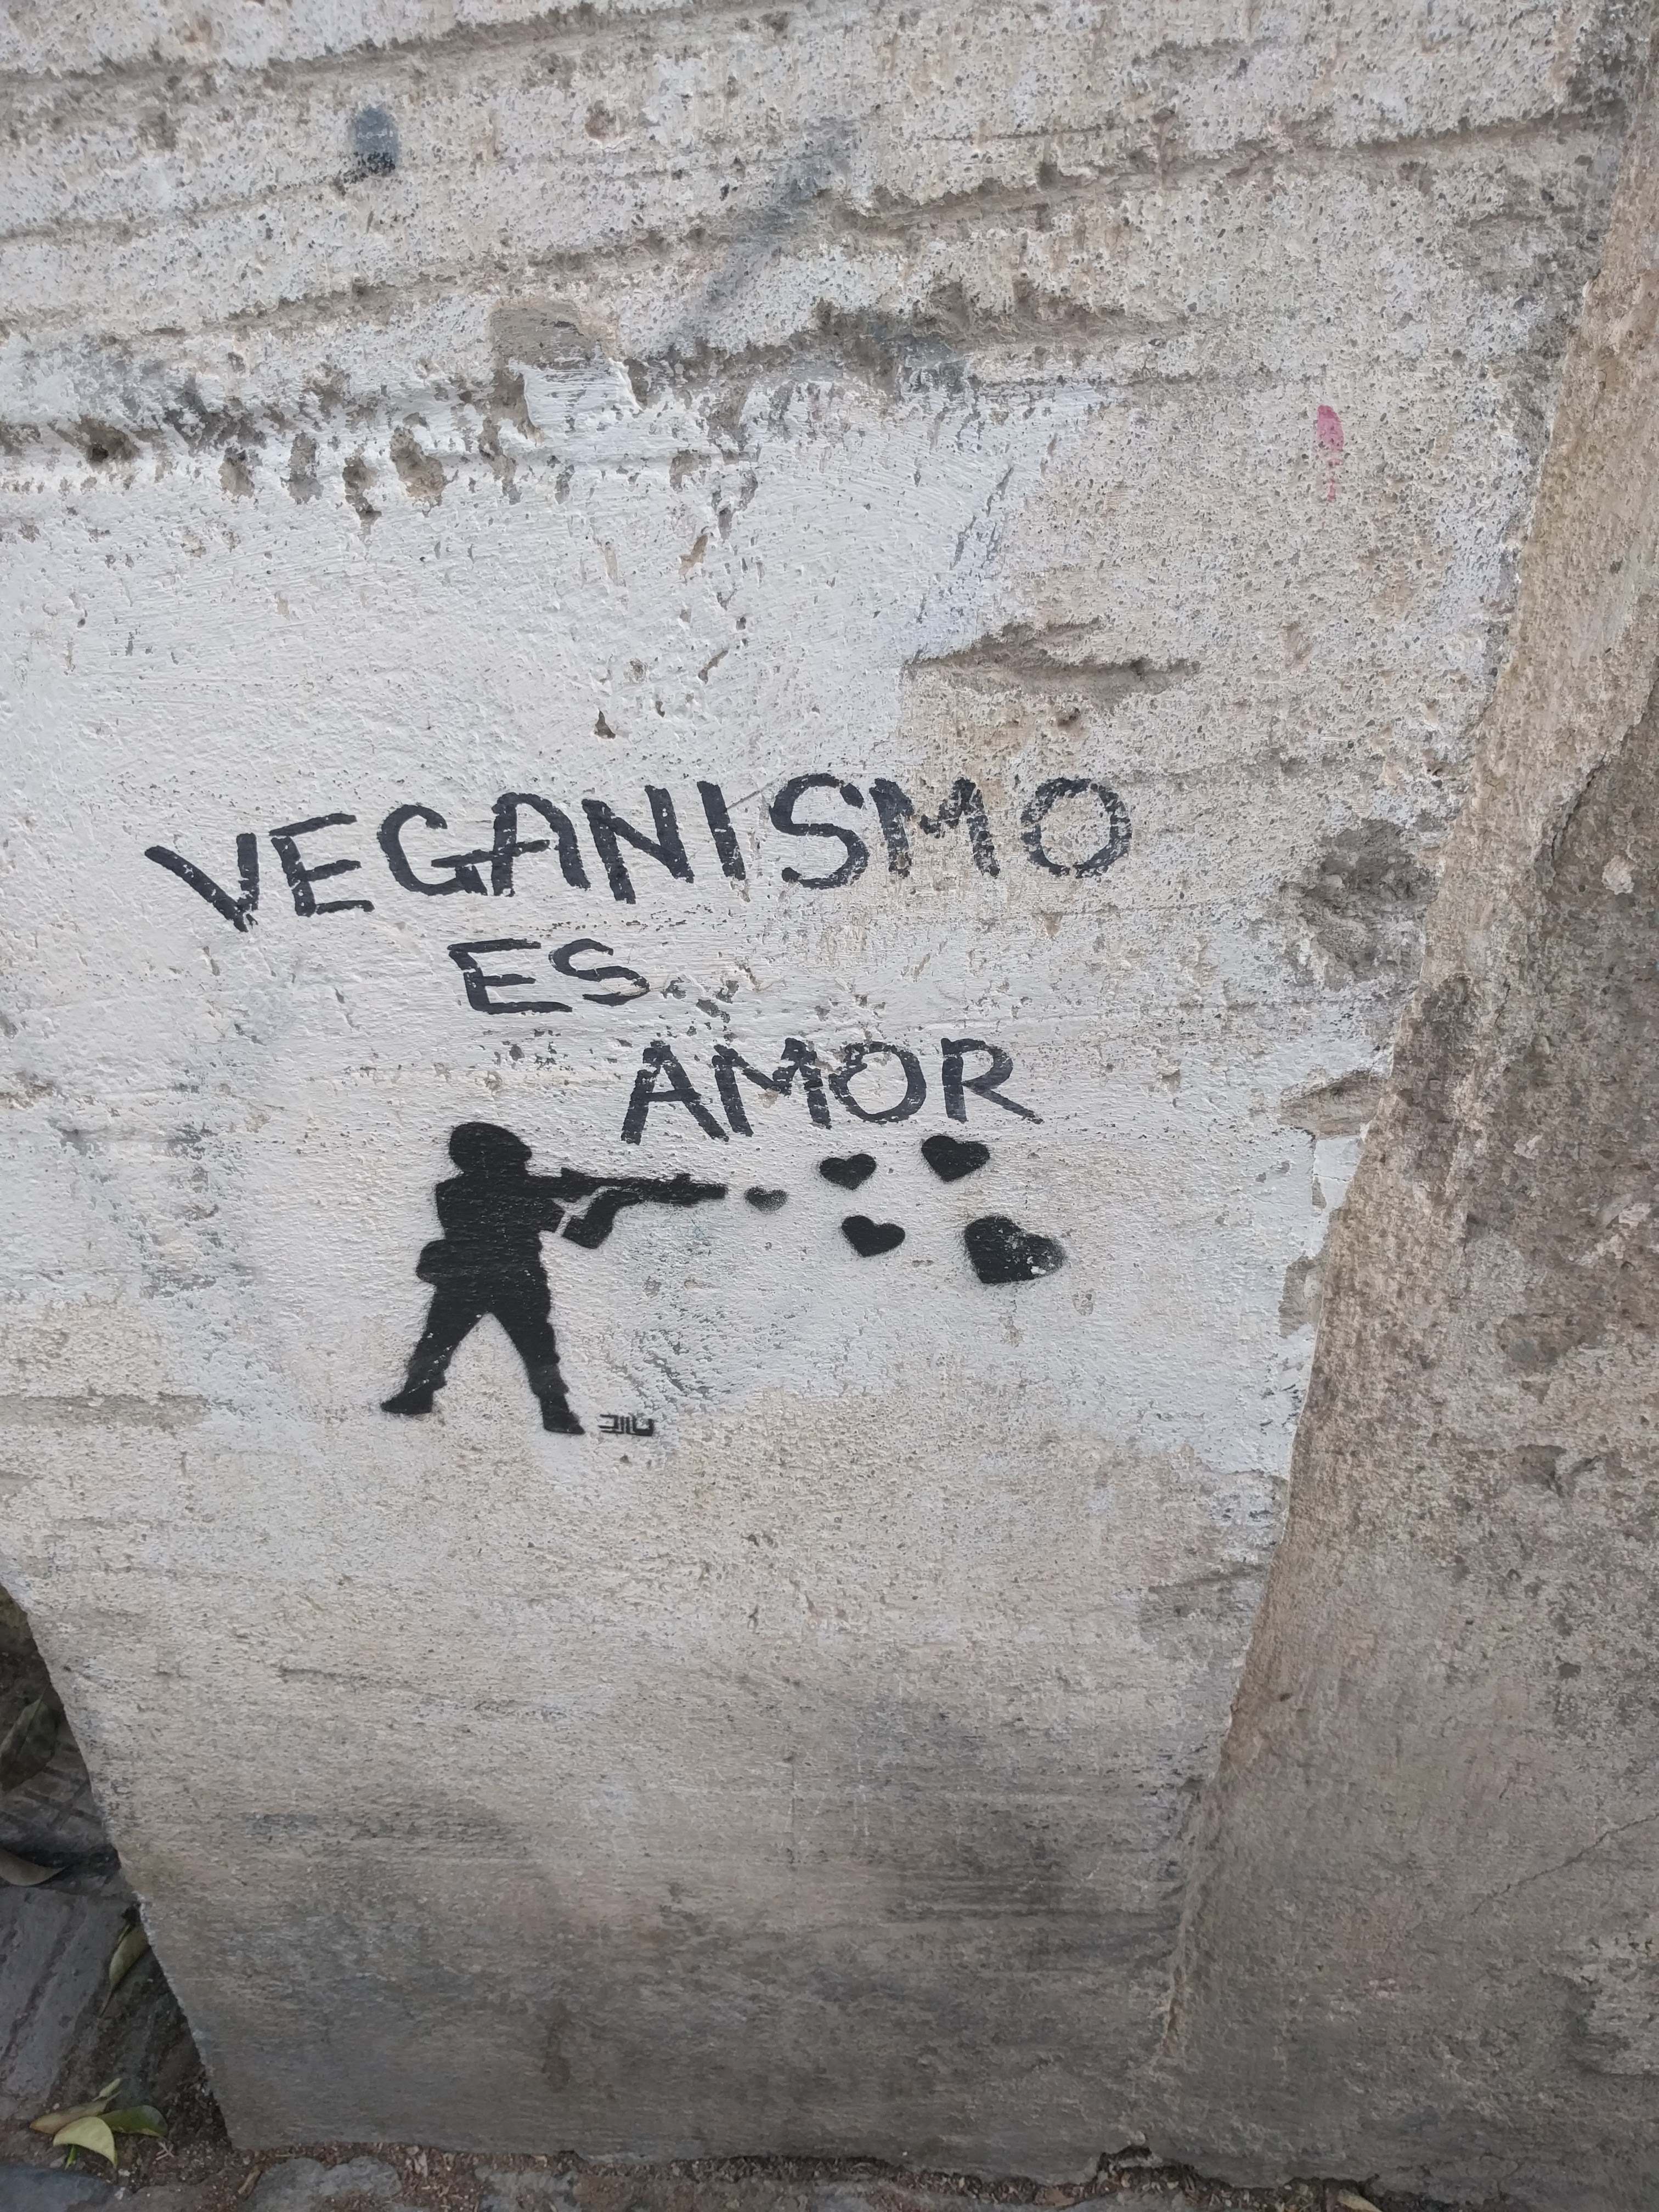 veganism is love